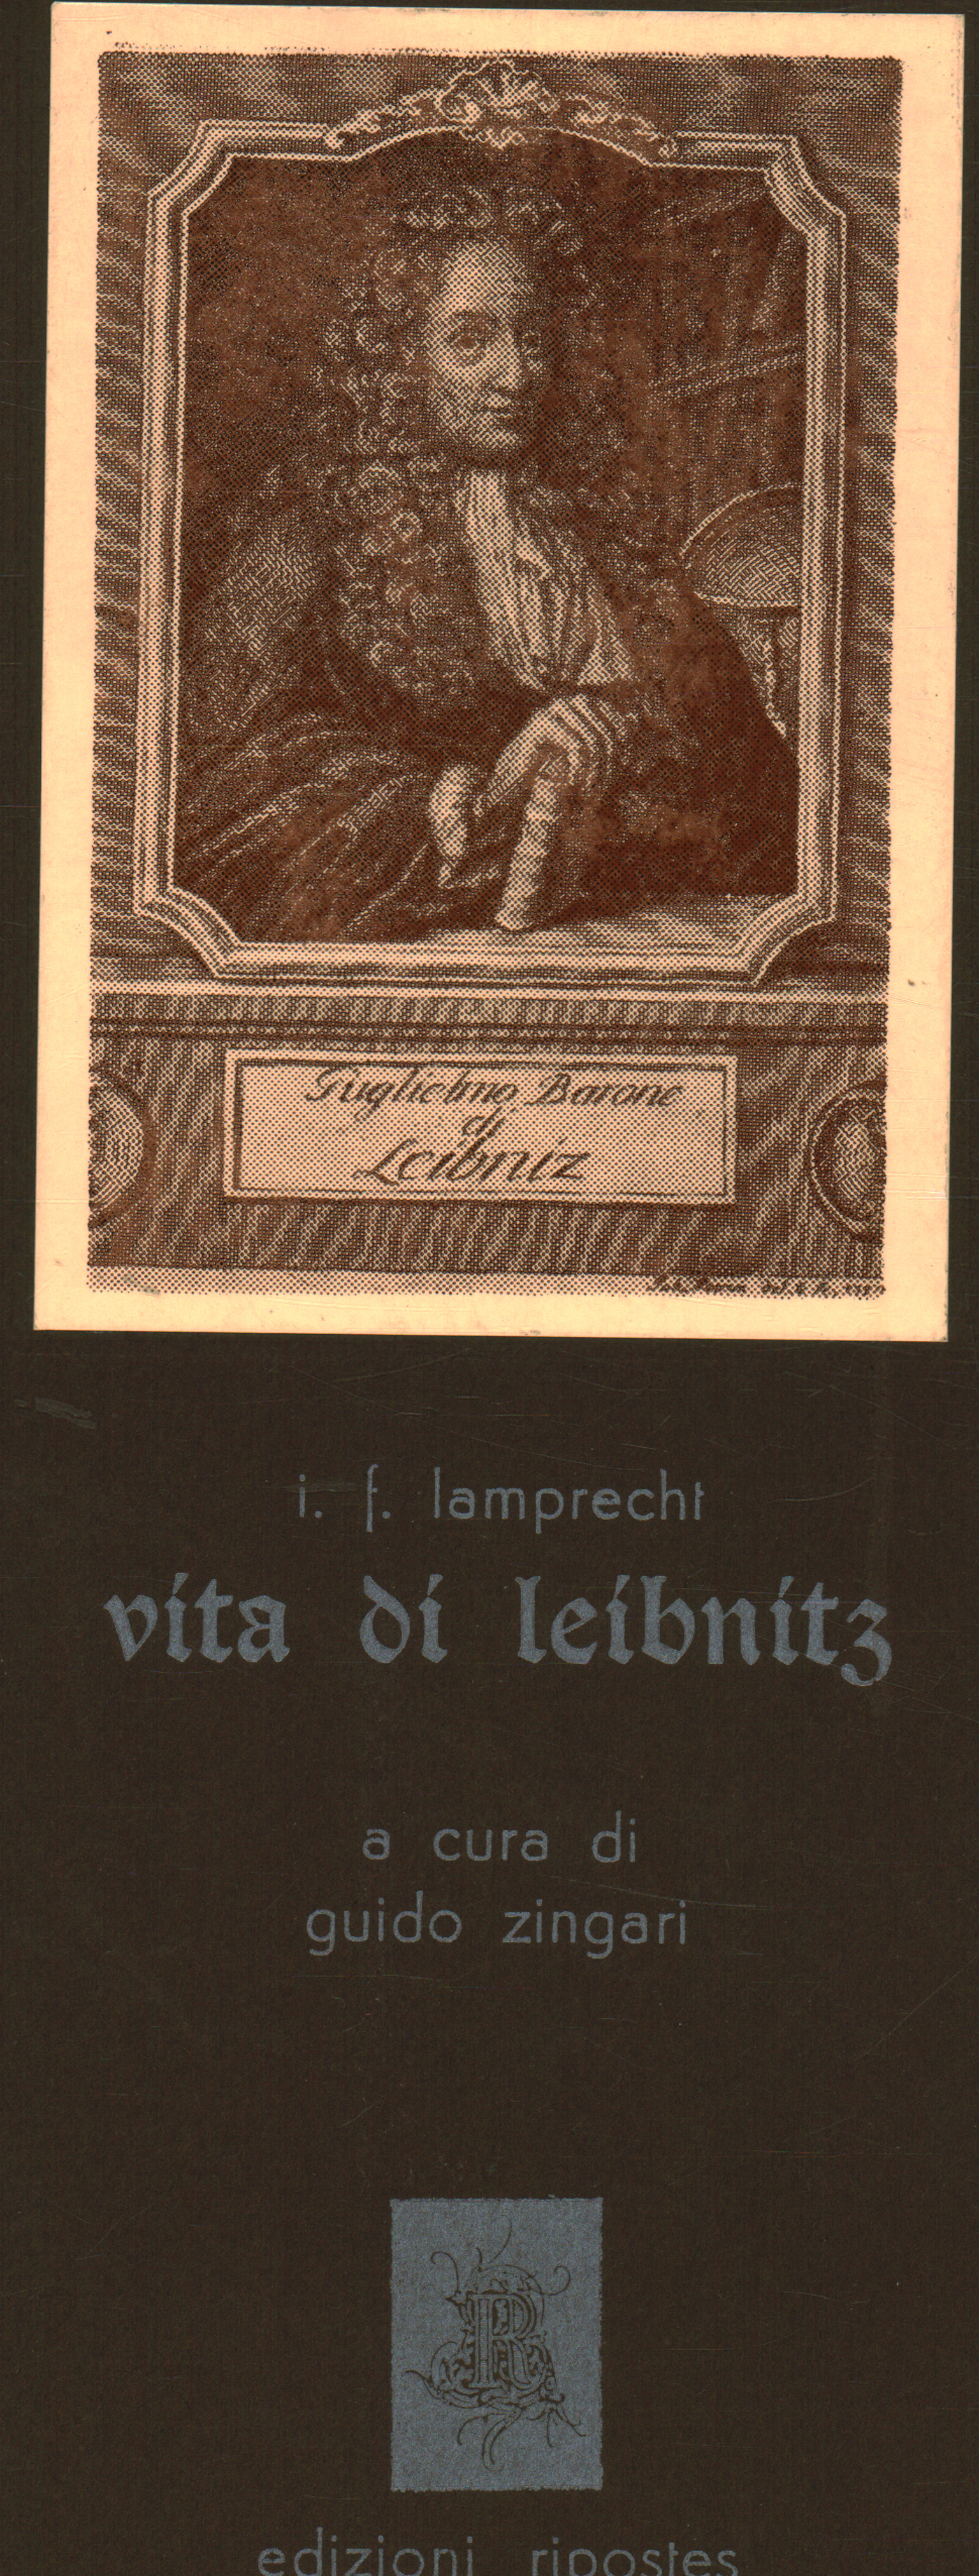 The life of Leibnitz, I. F. Lamprecht